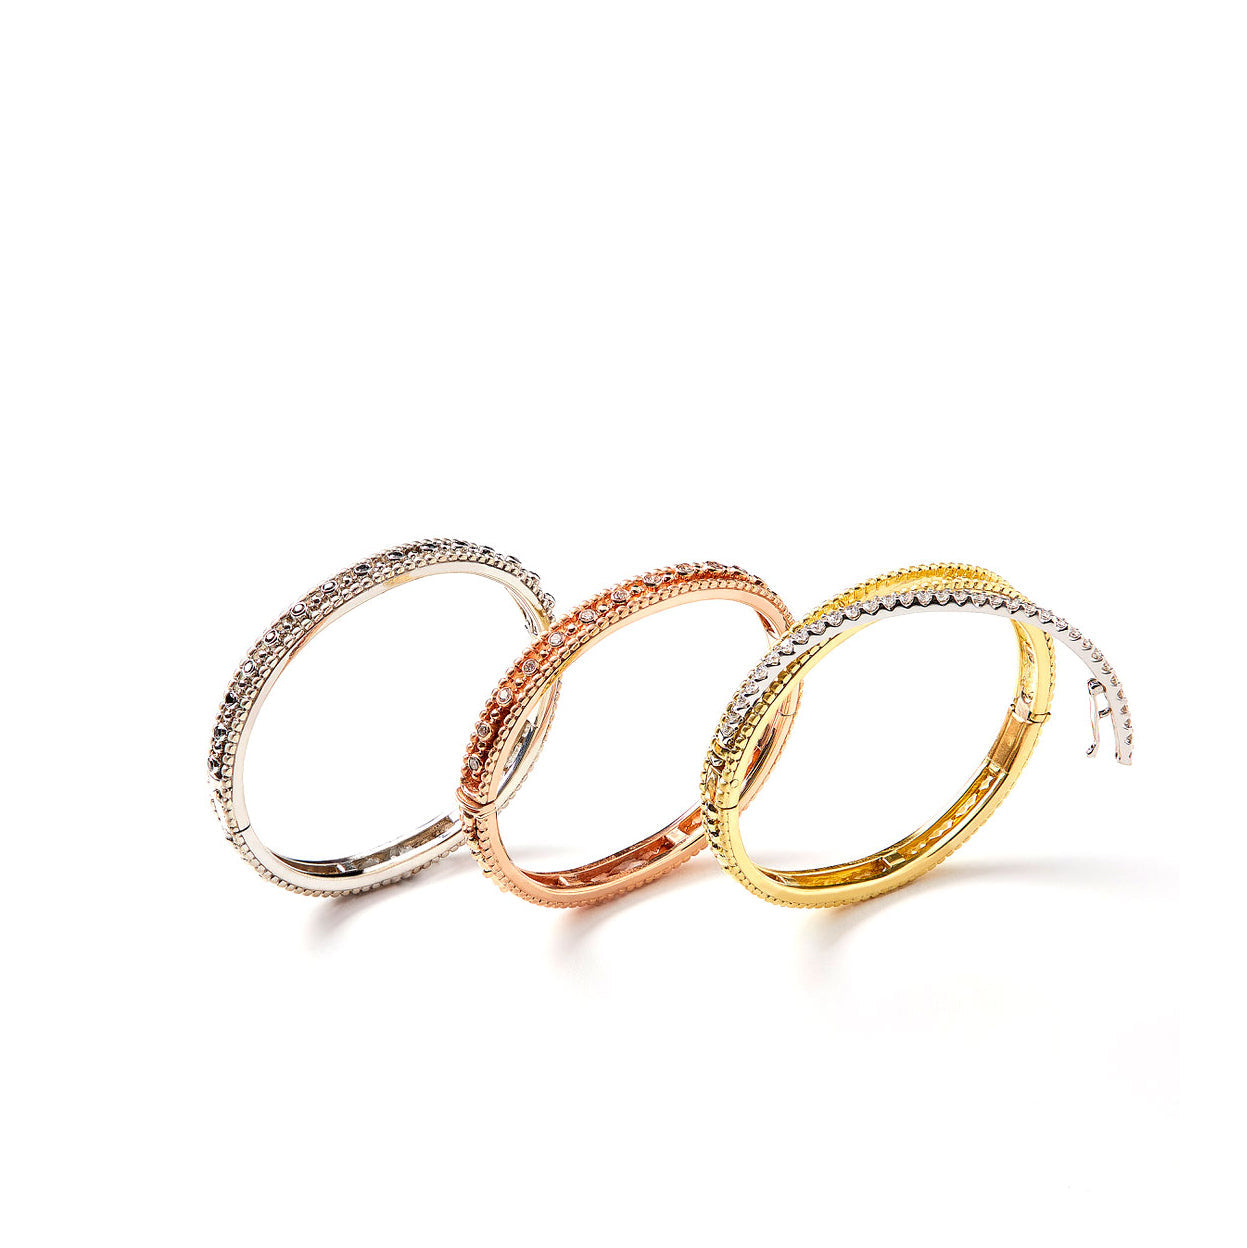 Interchangable and customizable gold and diamond bangle bracelets by Chicago jeweler, Lester Lampert